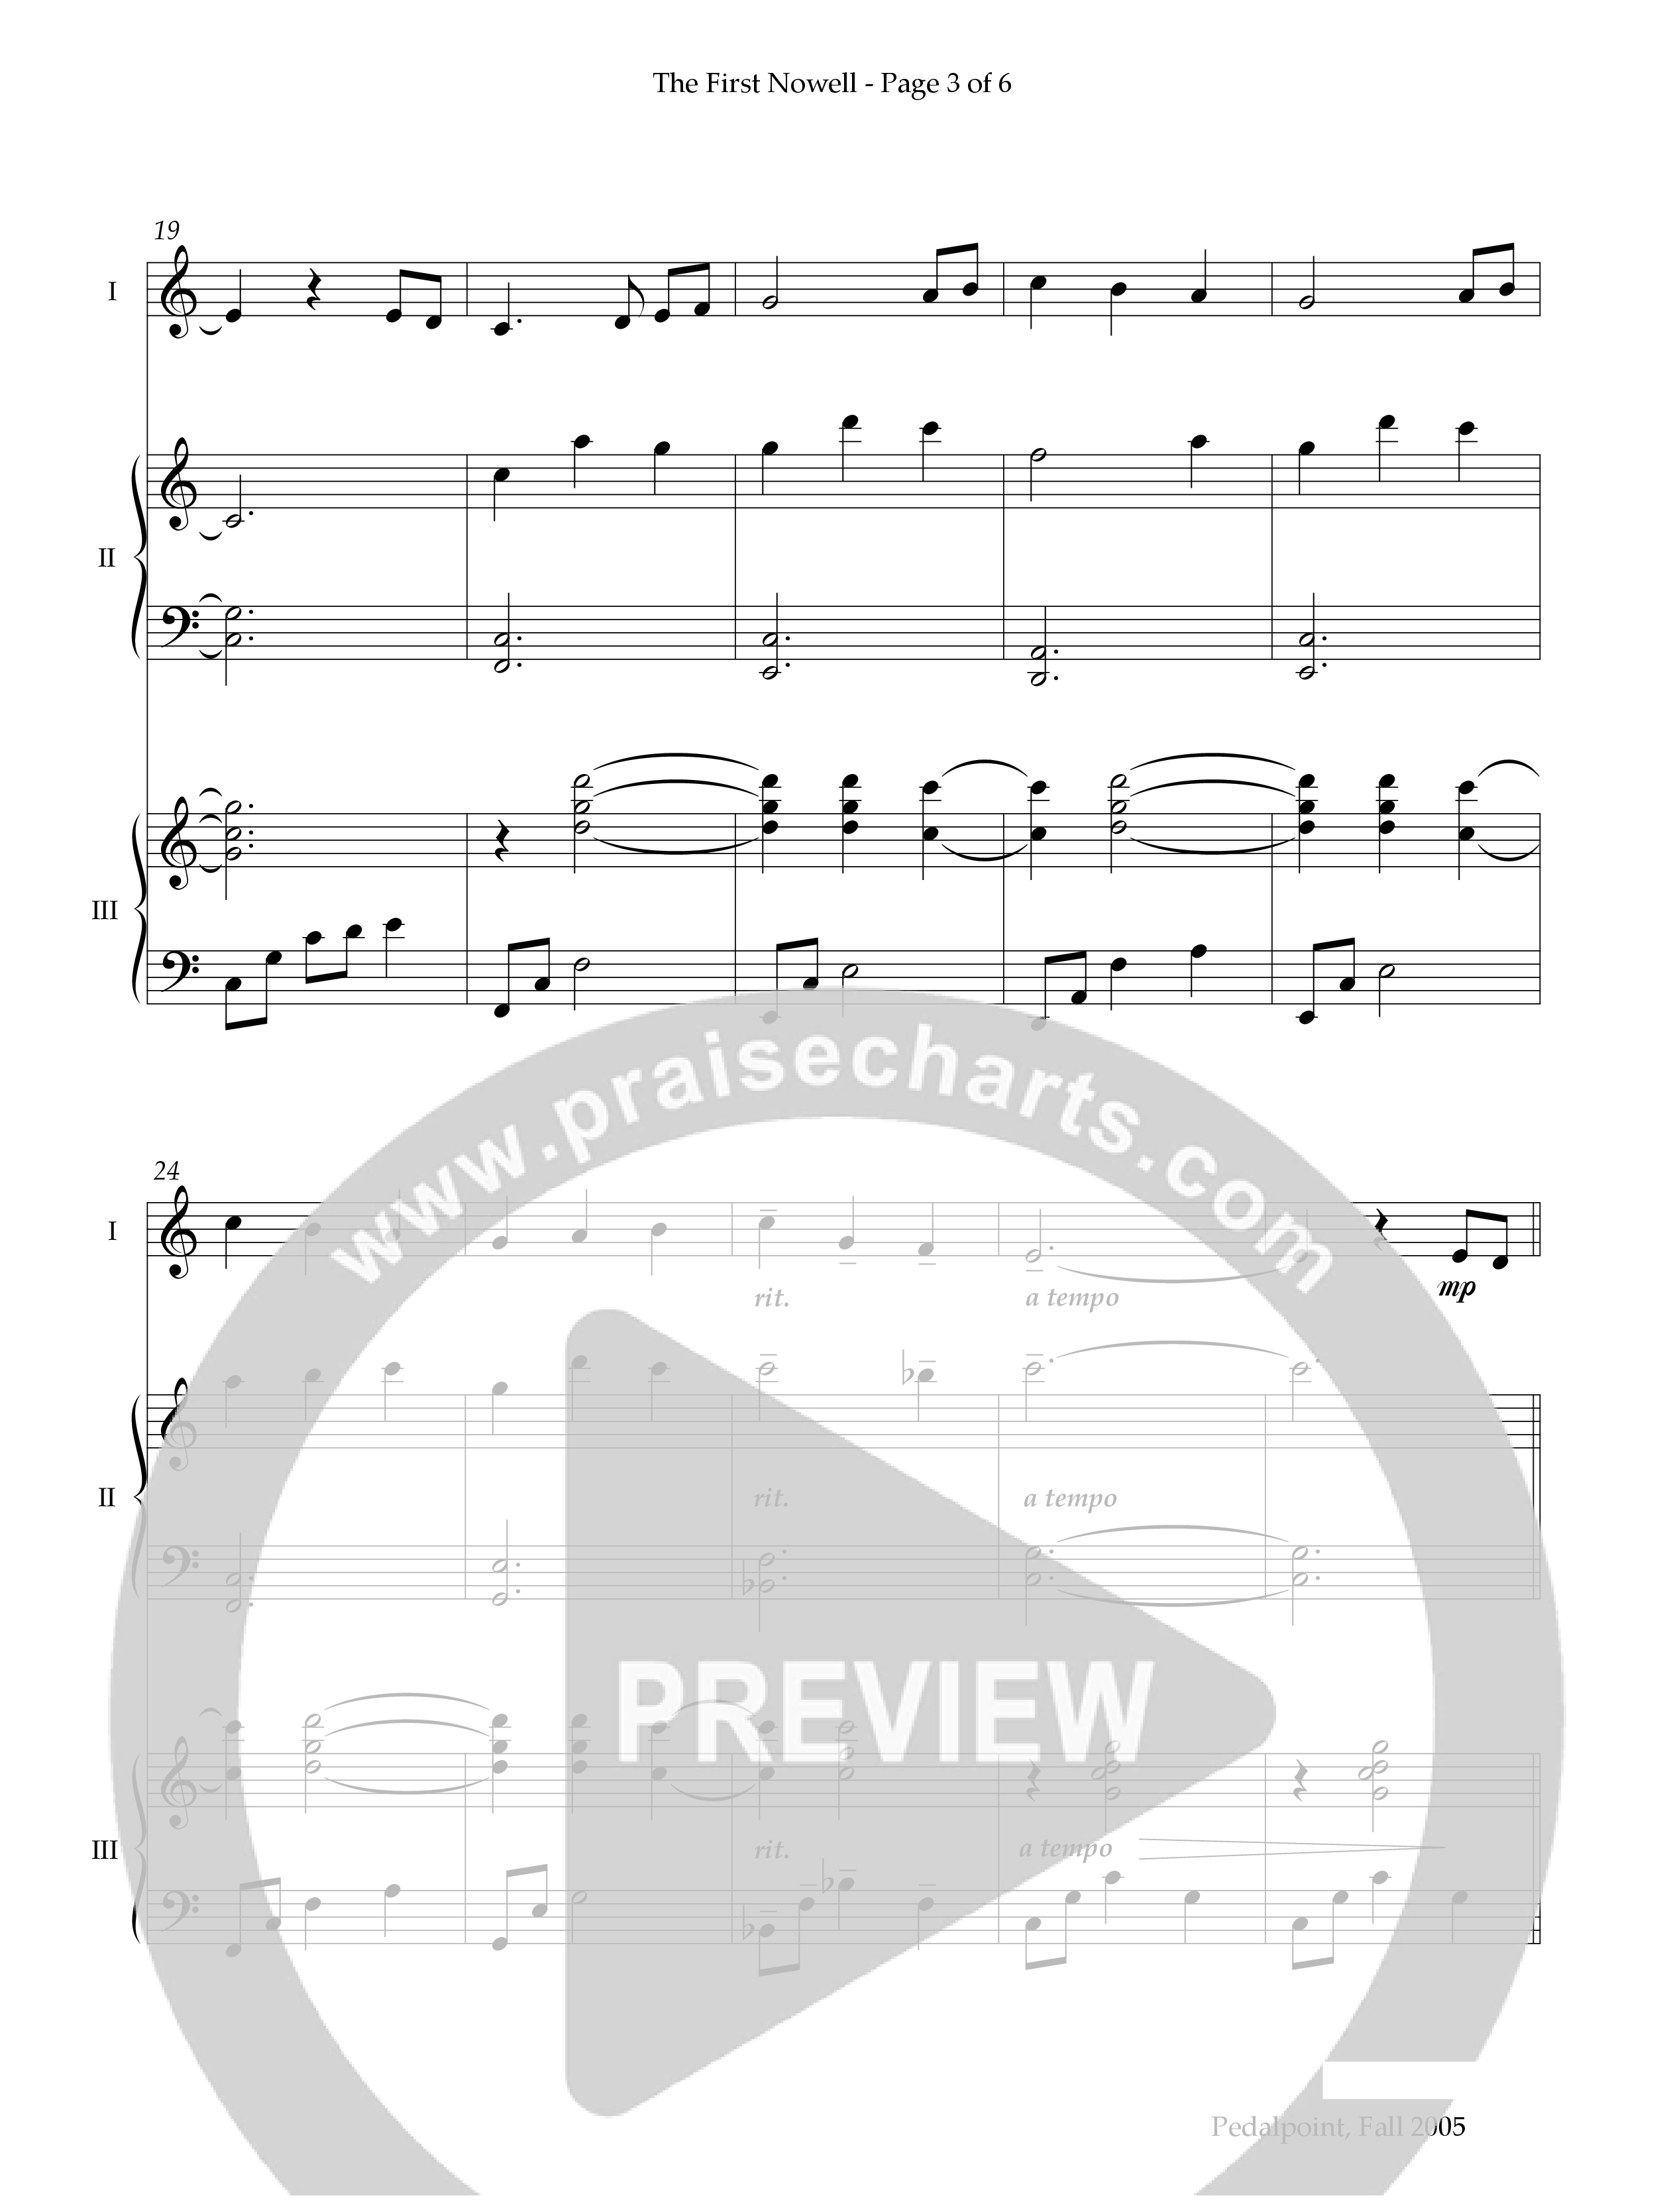 The First Nowell (Instrumental) Piano Sheet (Lifeway Worship / Arr. Michael Sharp)